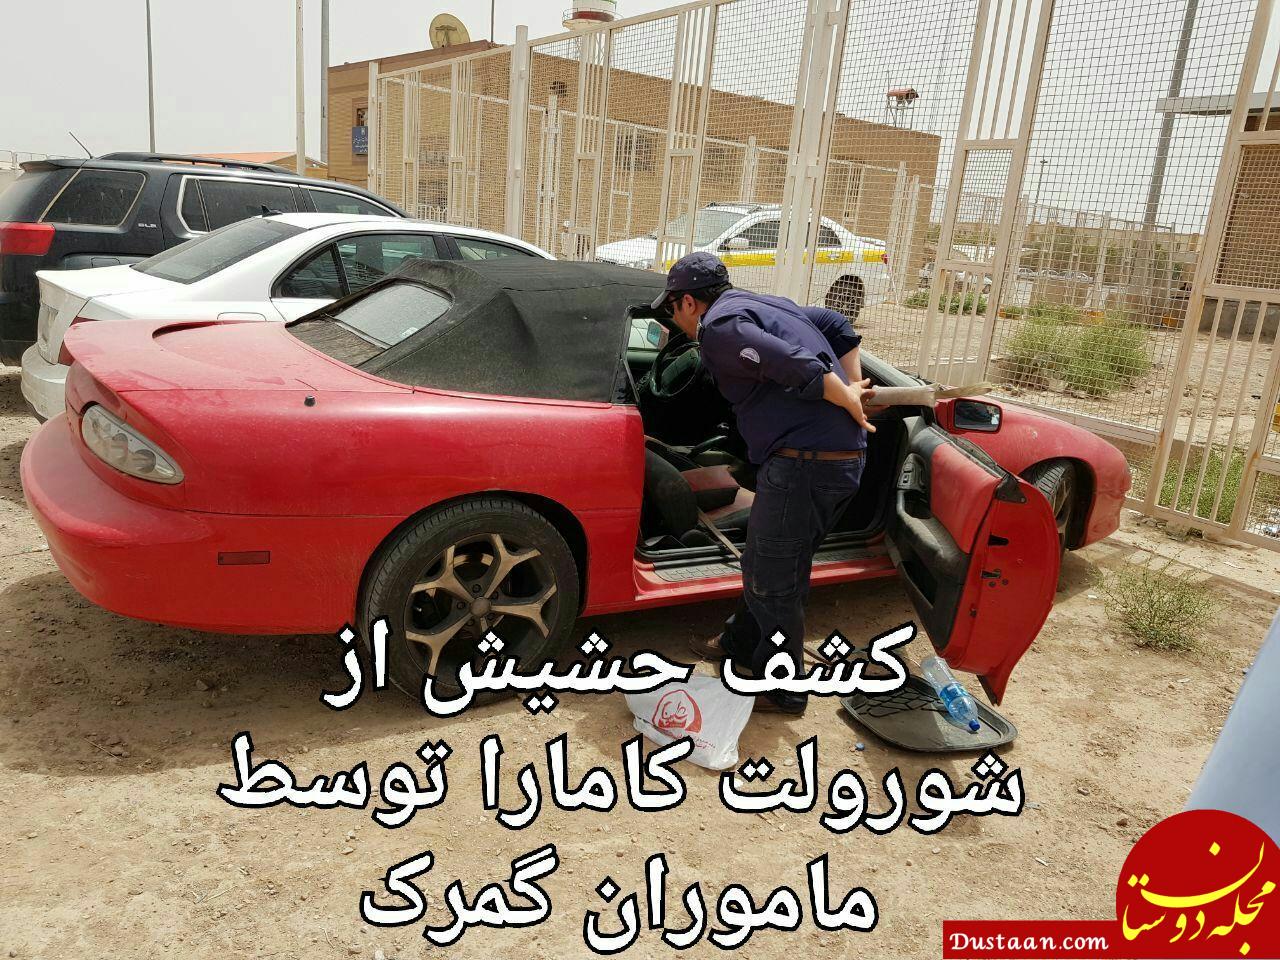 www.dustaan.com کشف حشیش از خودروی لوکس! +عکس